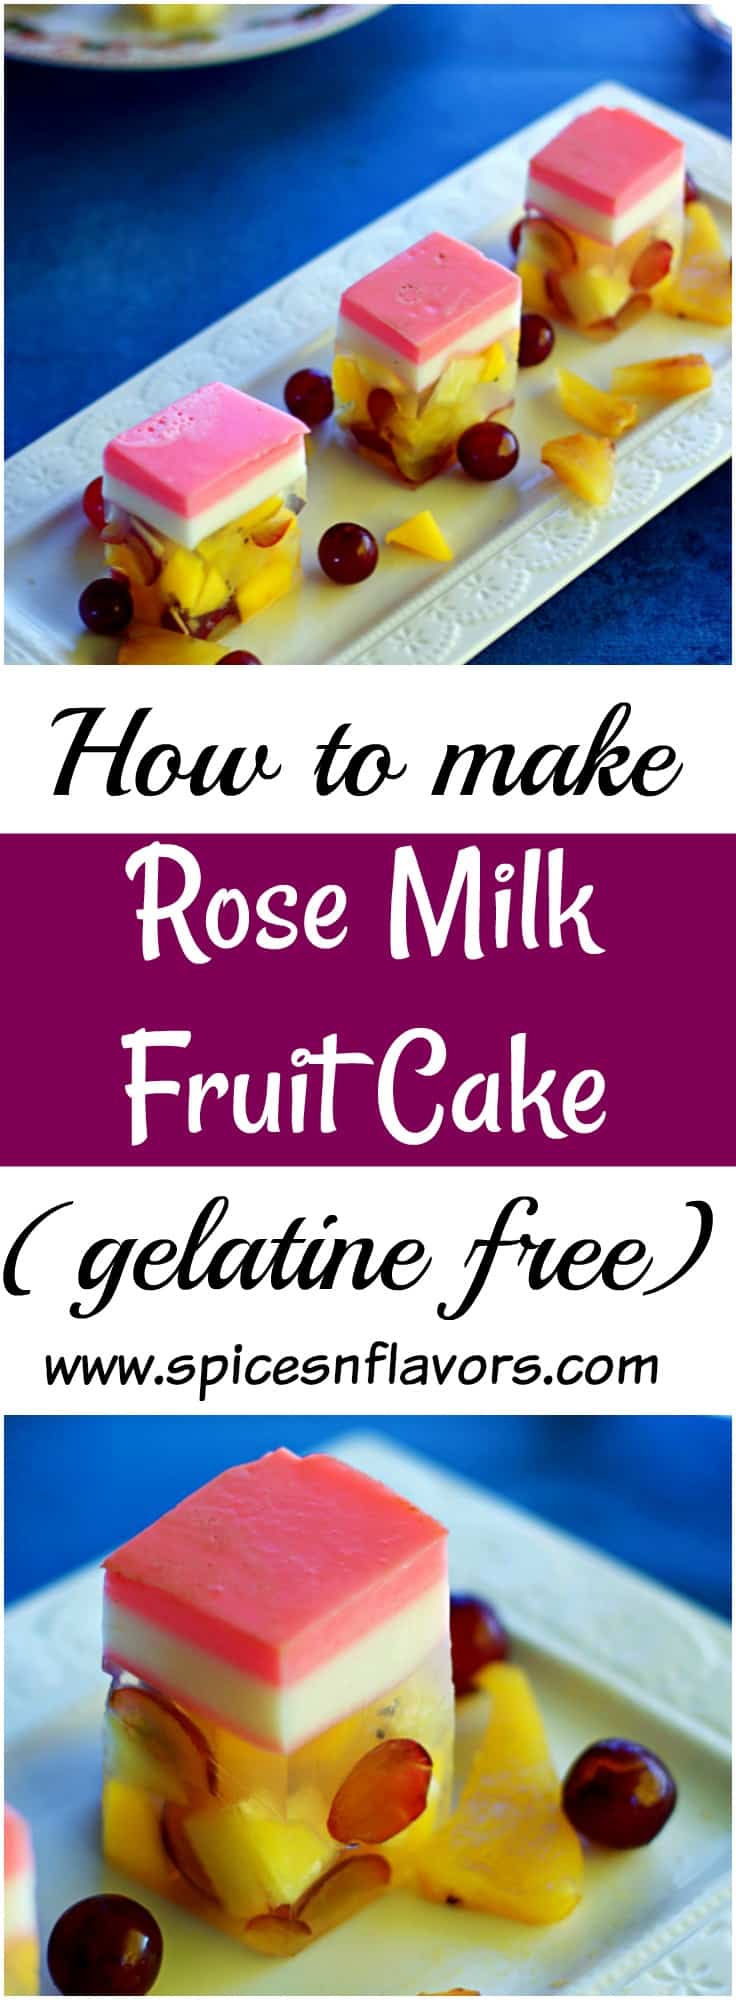 Rose Milk Fruit Cake Agar Agar Fruit Cake Learn how to use agar agar no gelatine recipe vegetarian recipe